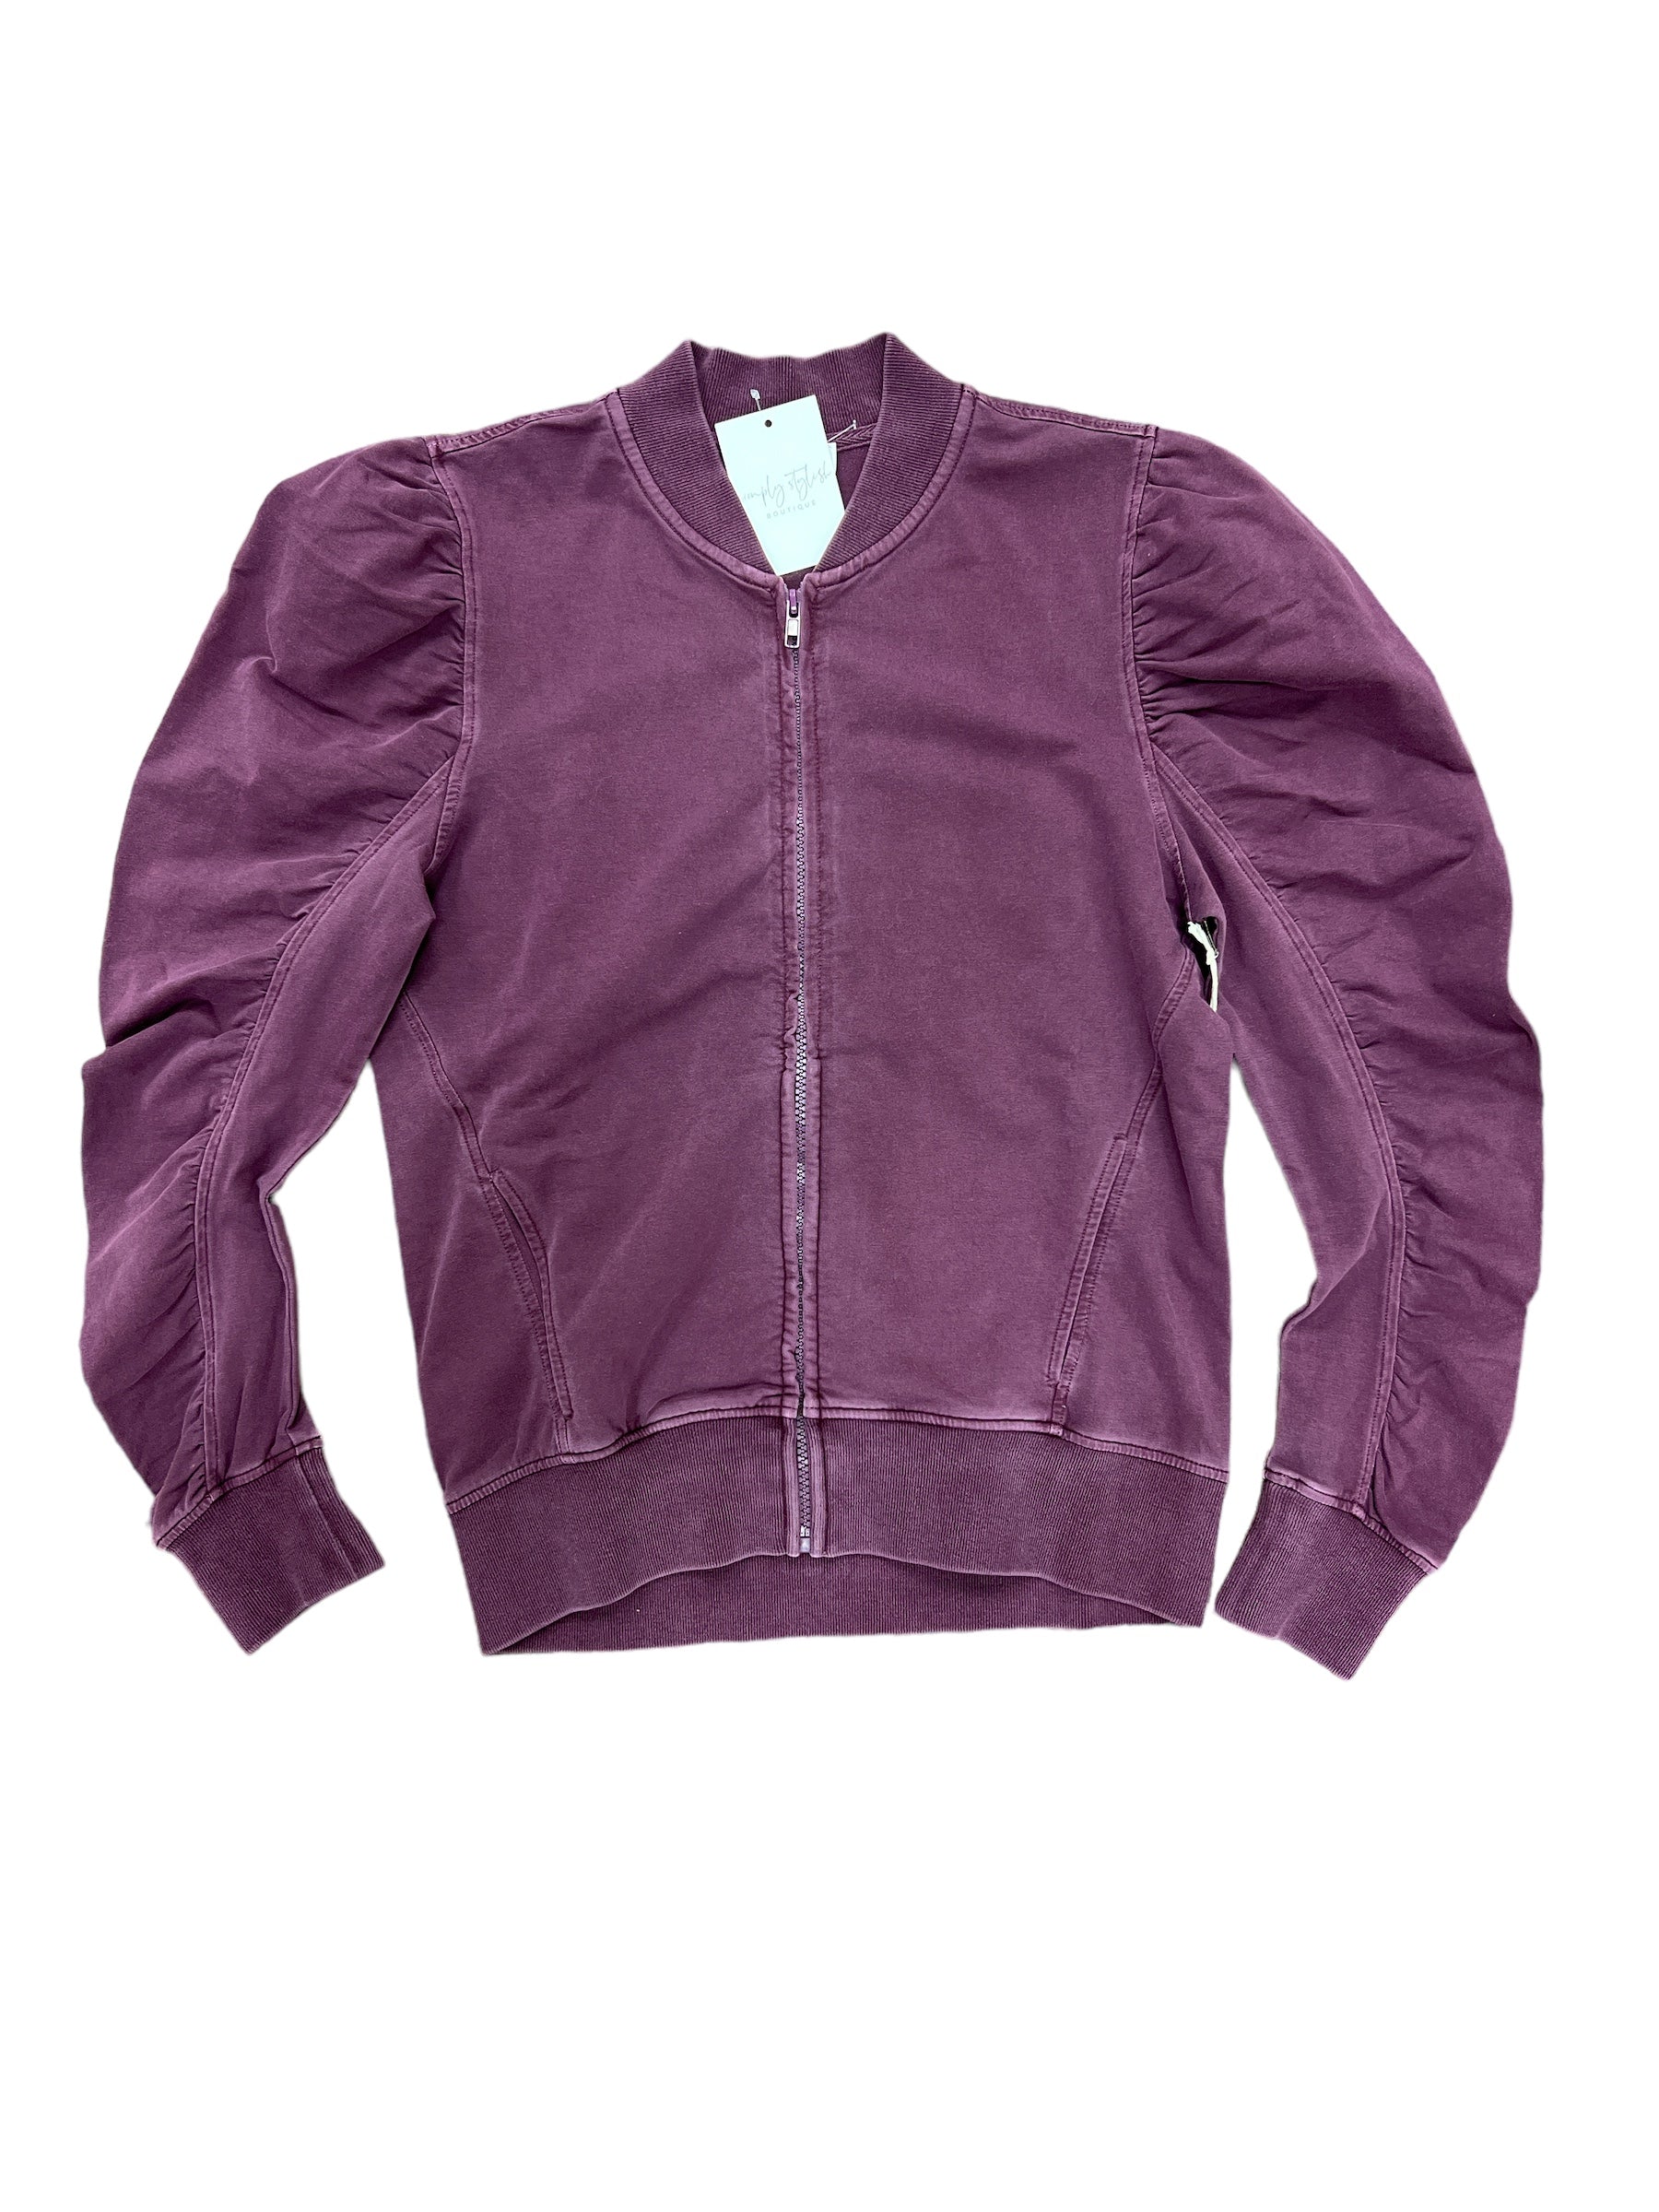 Kaya Prune-150 Jackets, Blazers, & Outerwear-Simply Stylish Boutique-Simply Stylish Boutique | Women’s & Kid’s Fashion | Paducah, KY